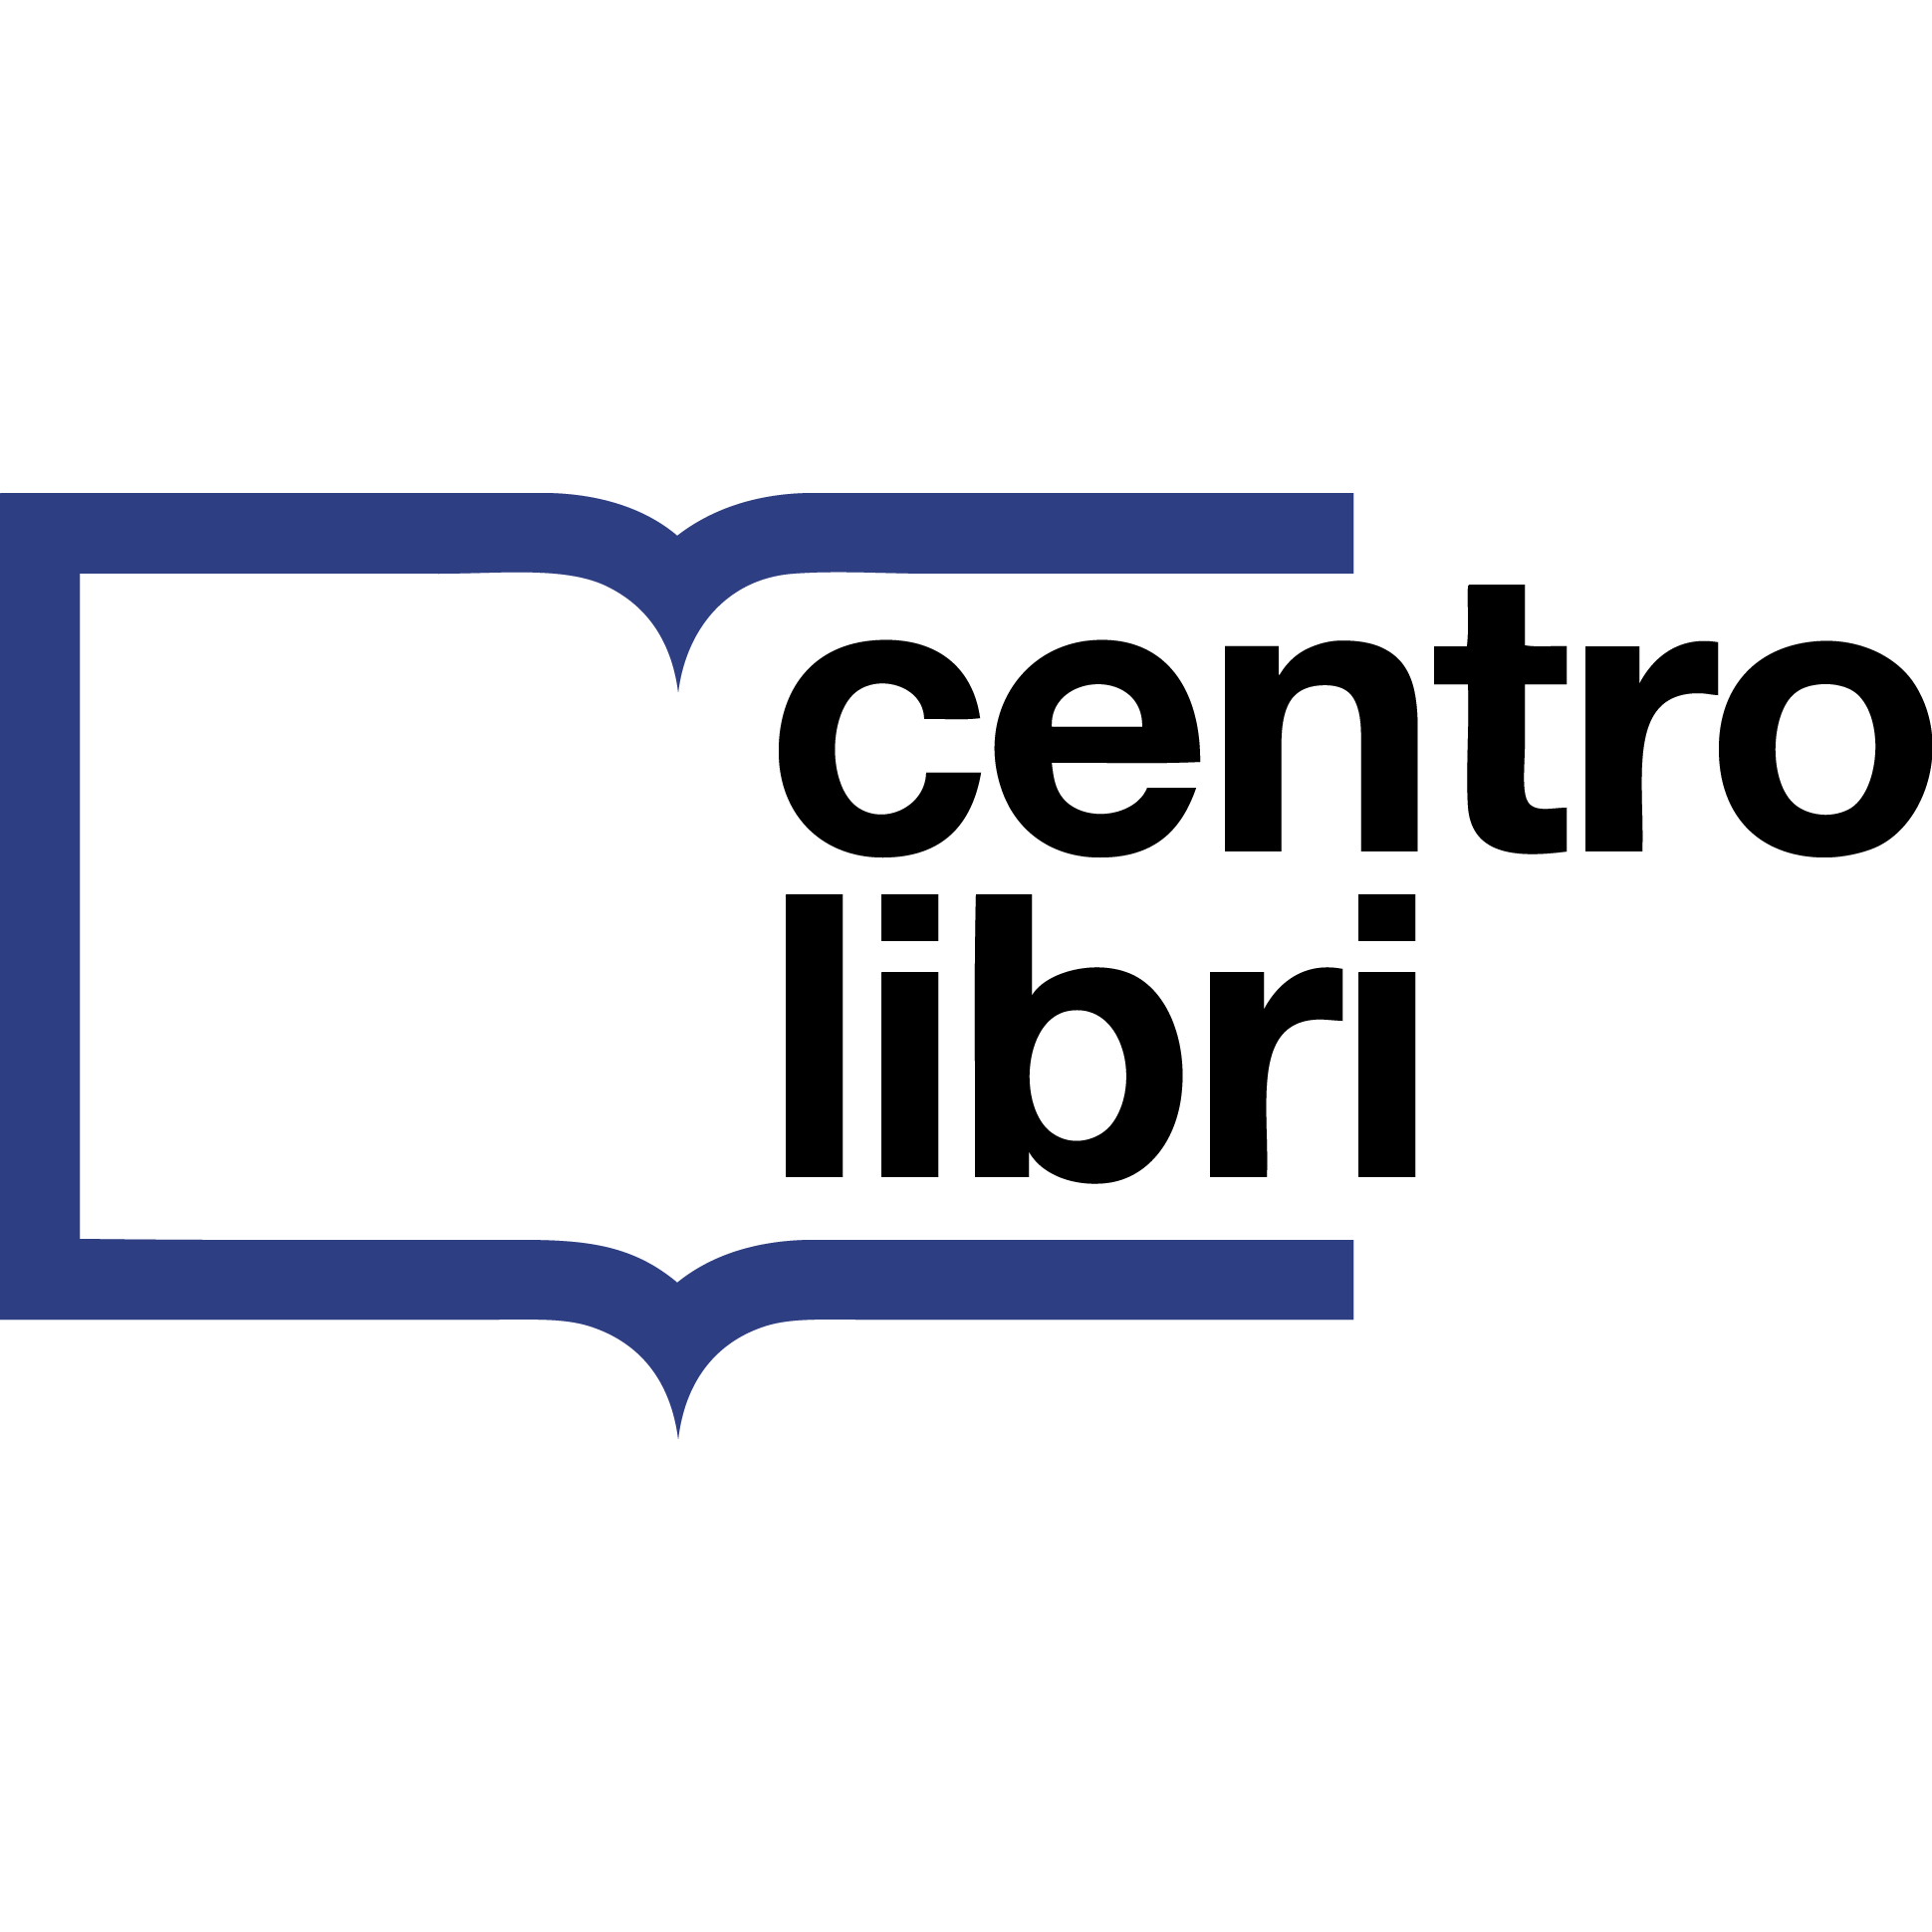 Centrolibri logo